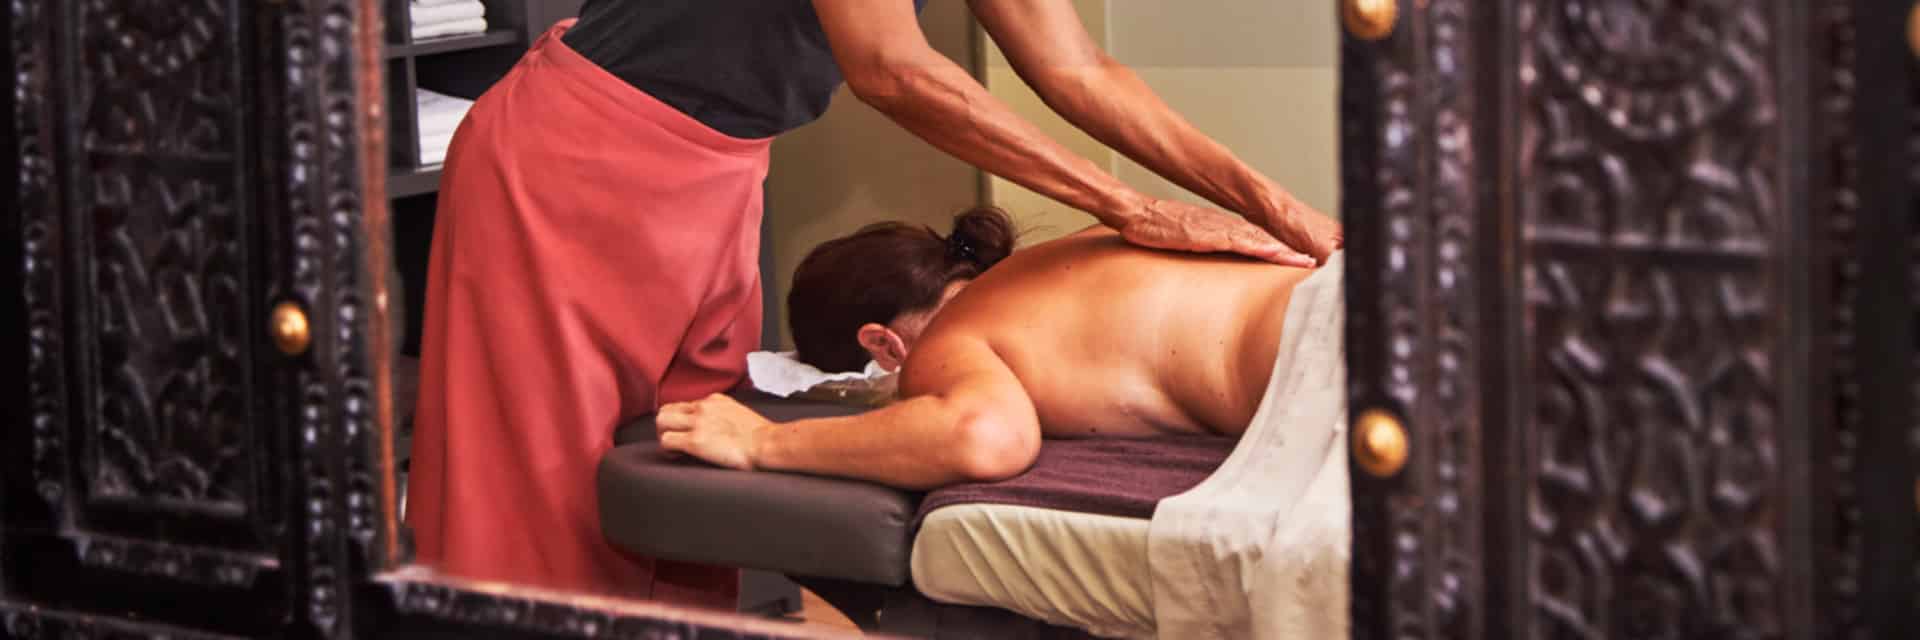 Massage rituals